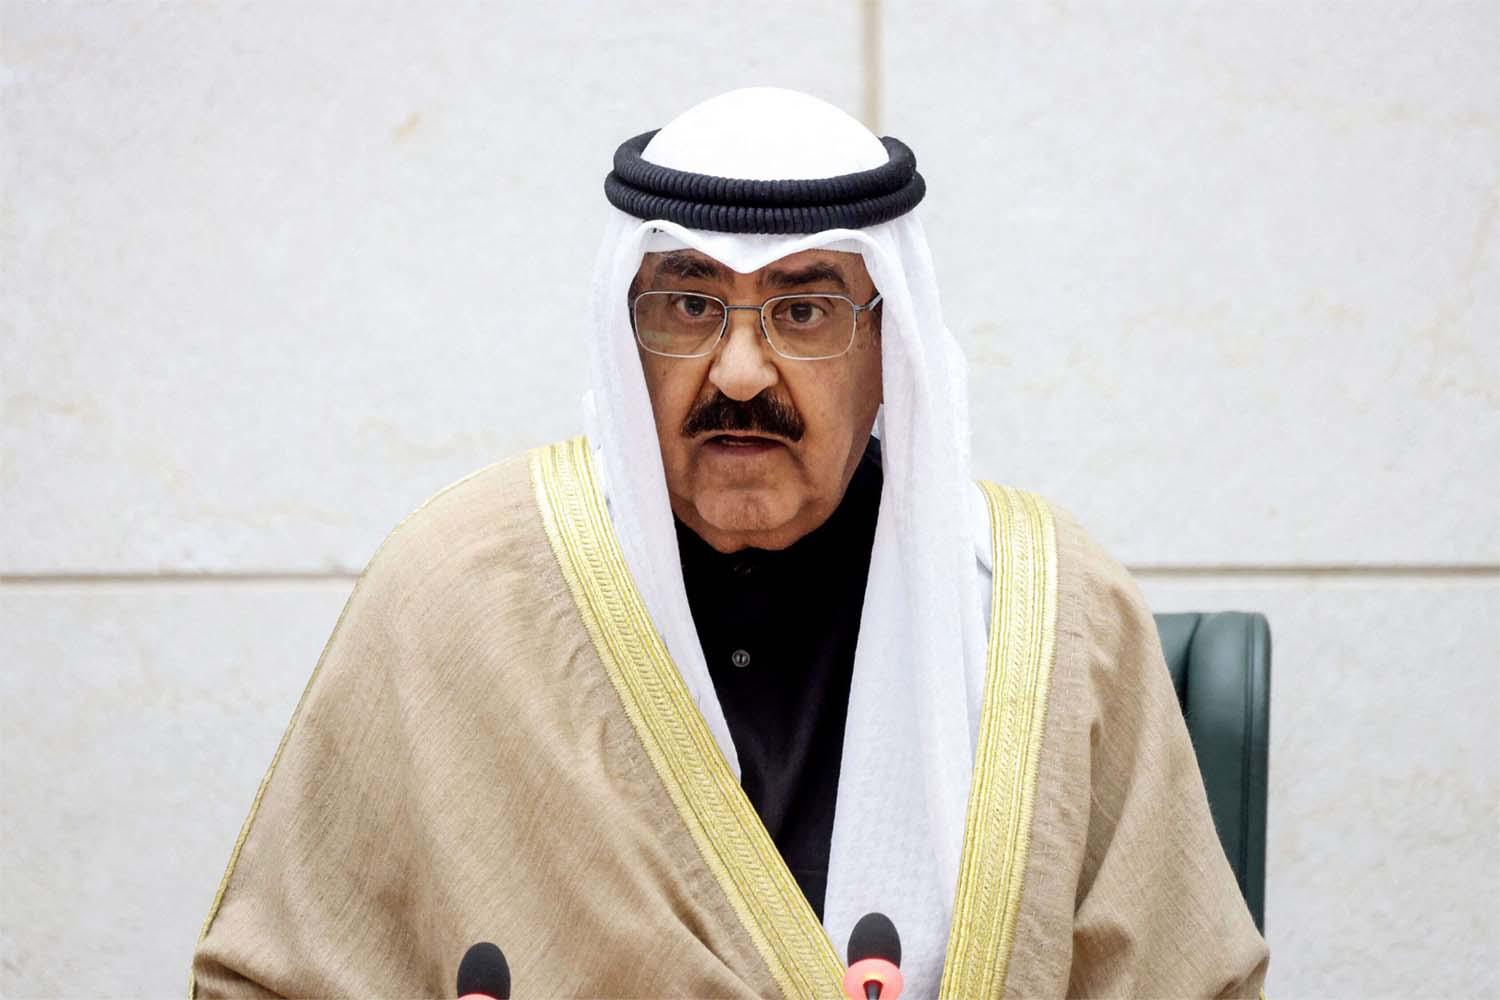 Kuwait's new Emir Sheikh Meshal al-Ahmad al-Sabah